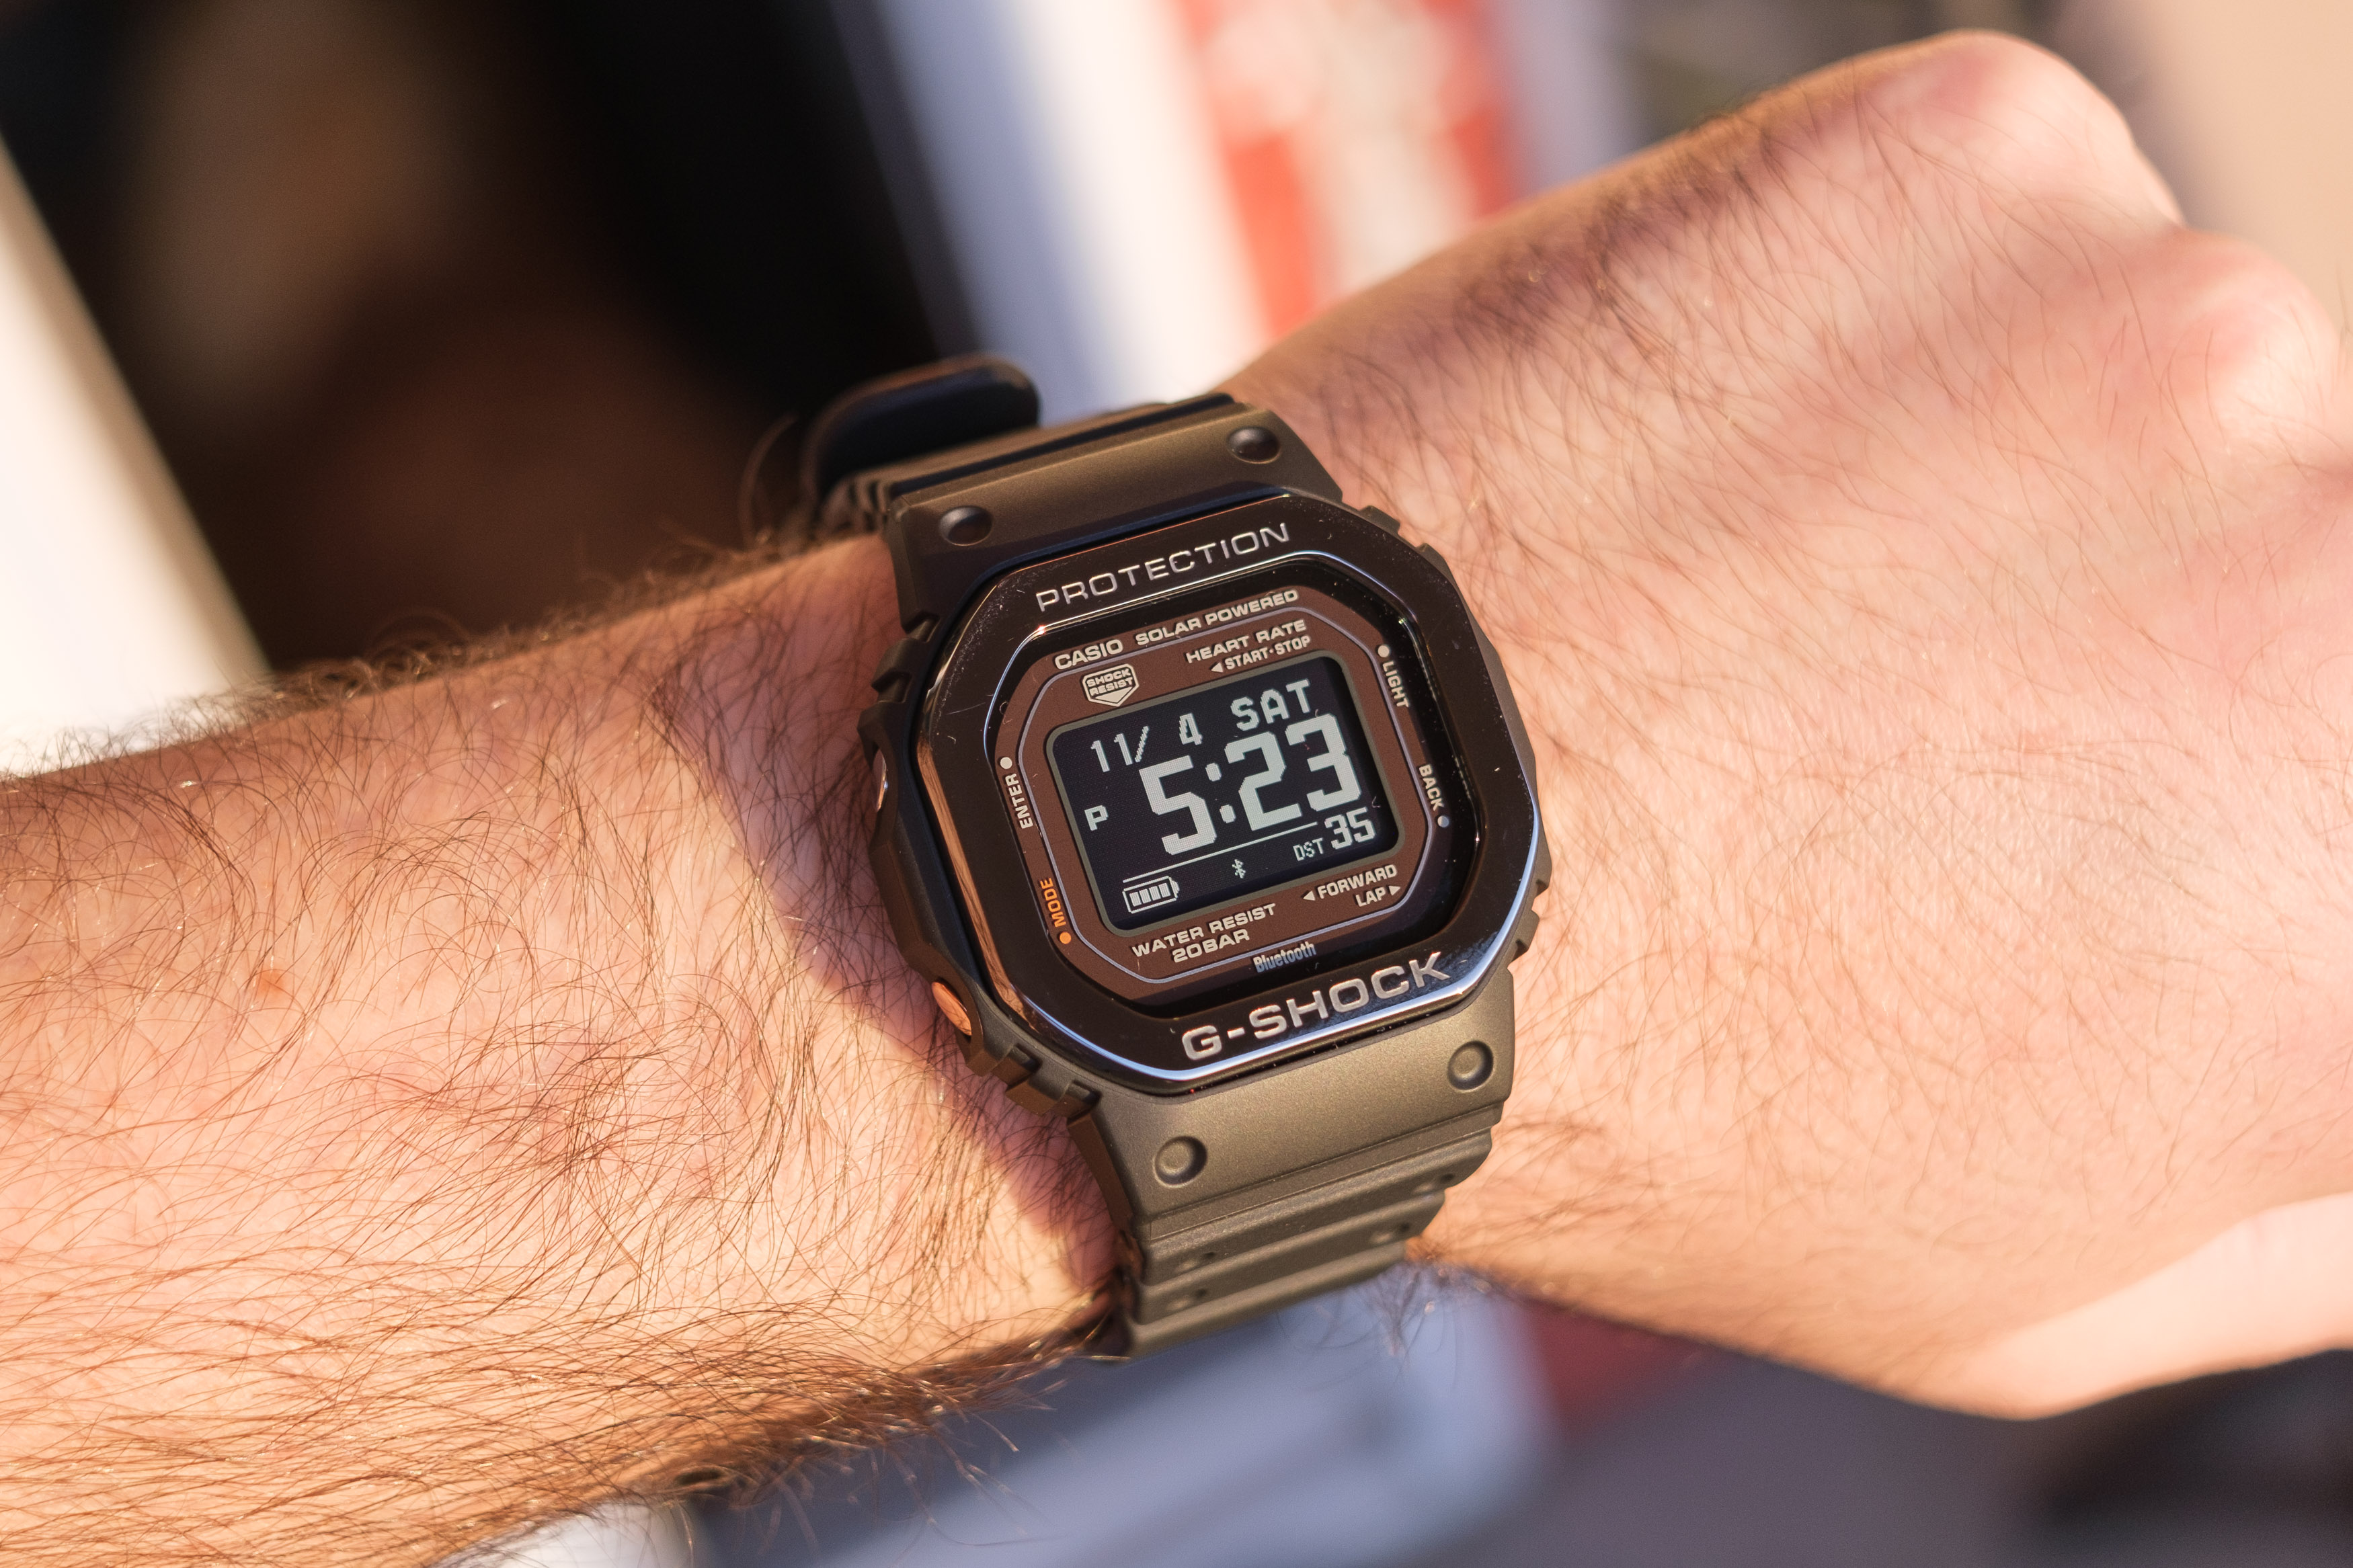 Casio is finally making a smartwatch